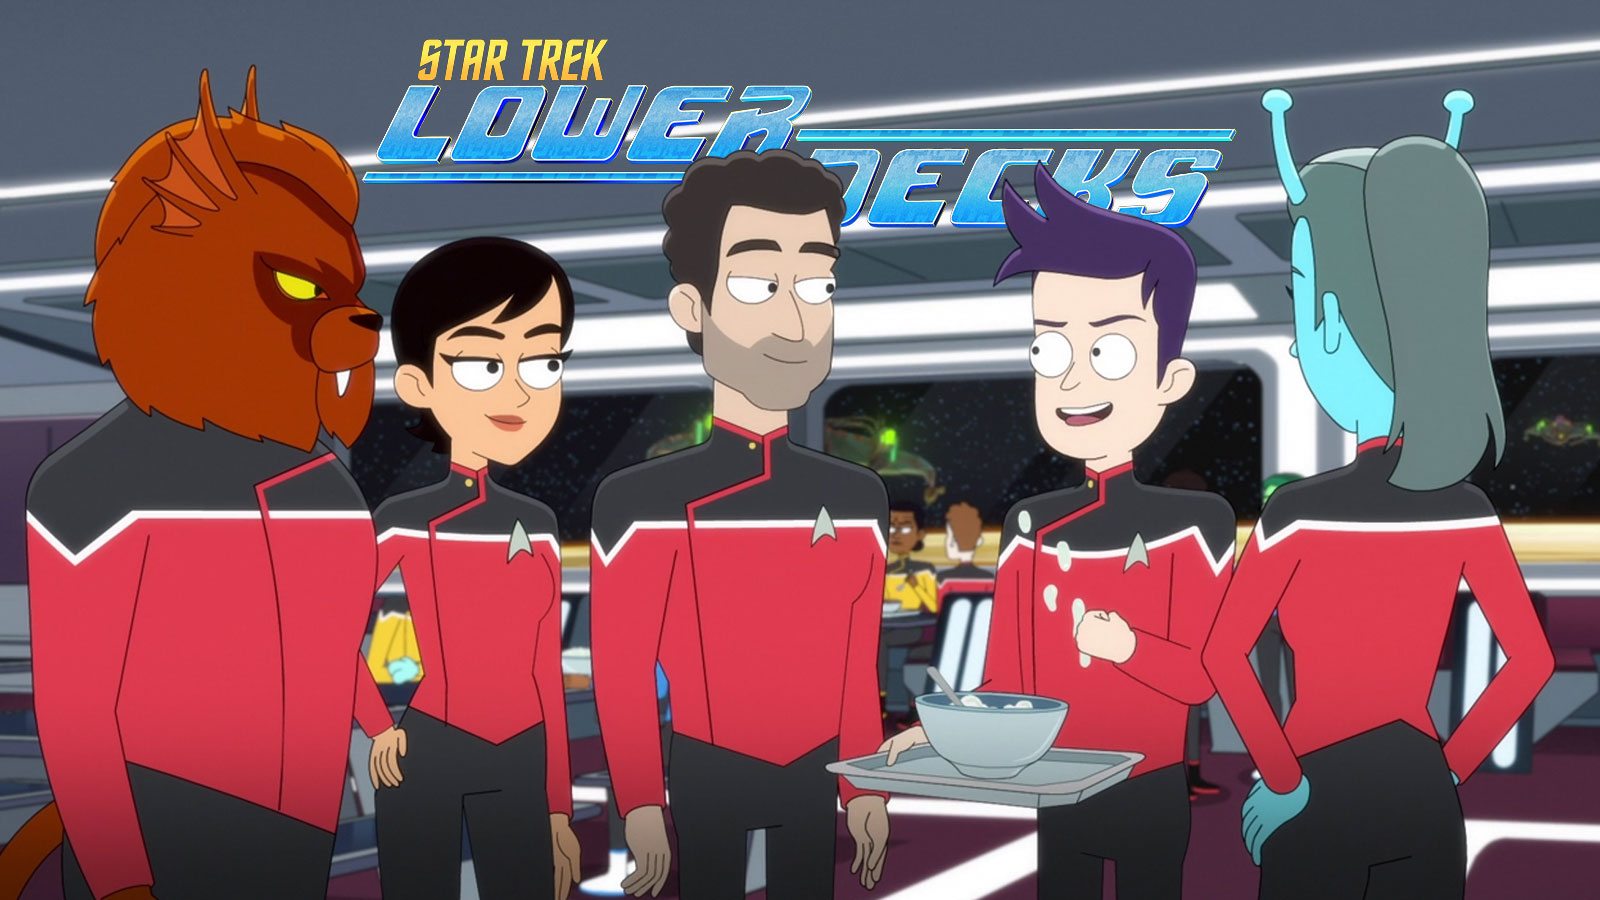 Star Trek: Lower Decks Episode 206 Review: Boimler Gets An Upgrade In "The Spy Humongous"